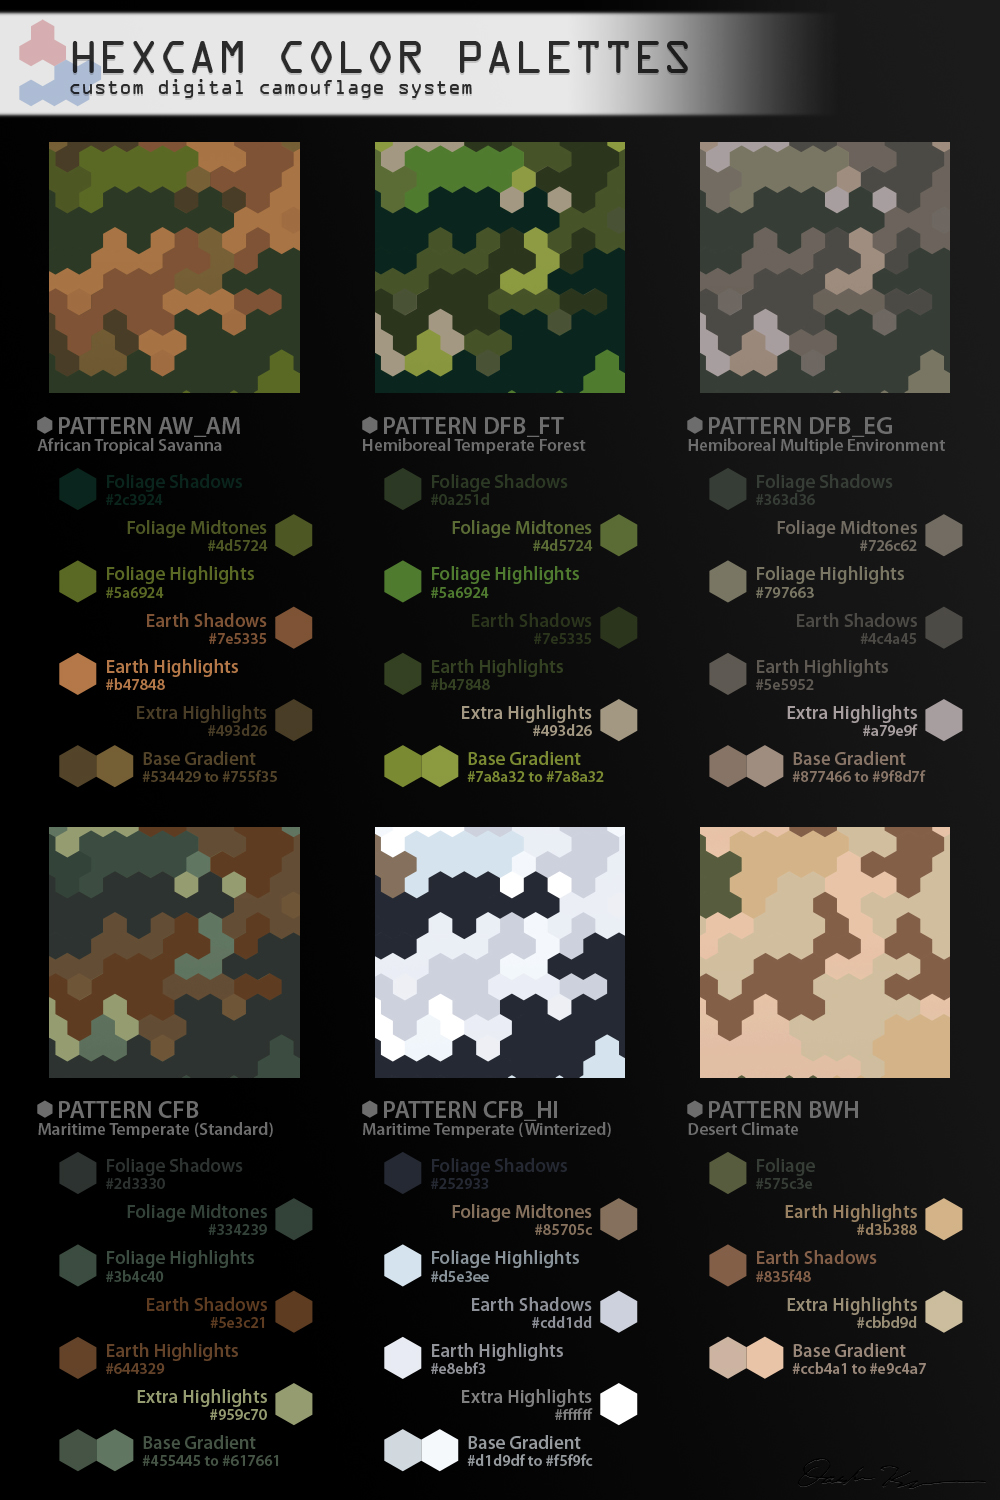 Camouflage Patterns II